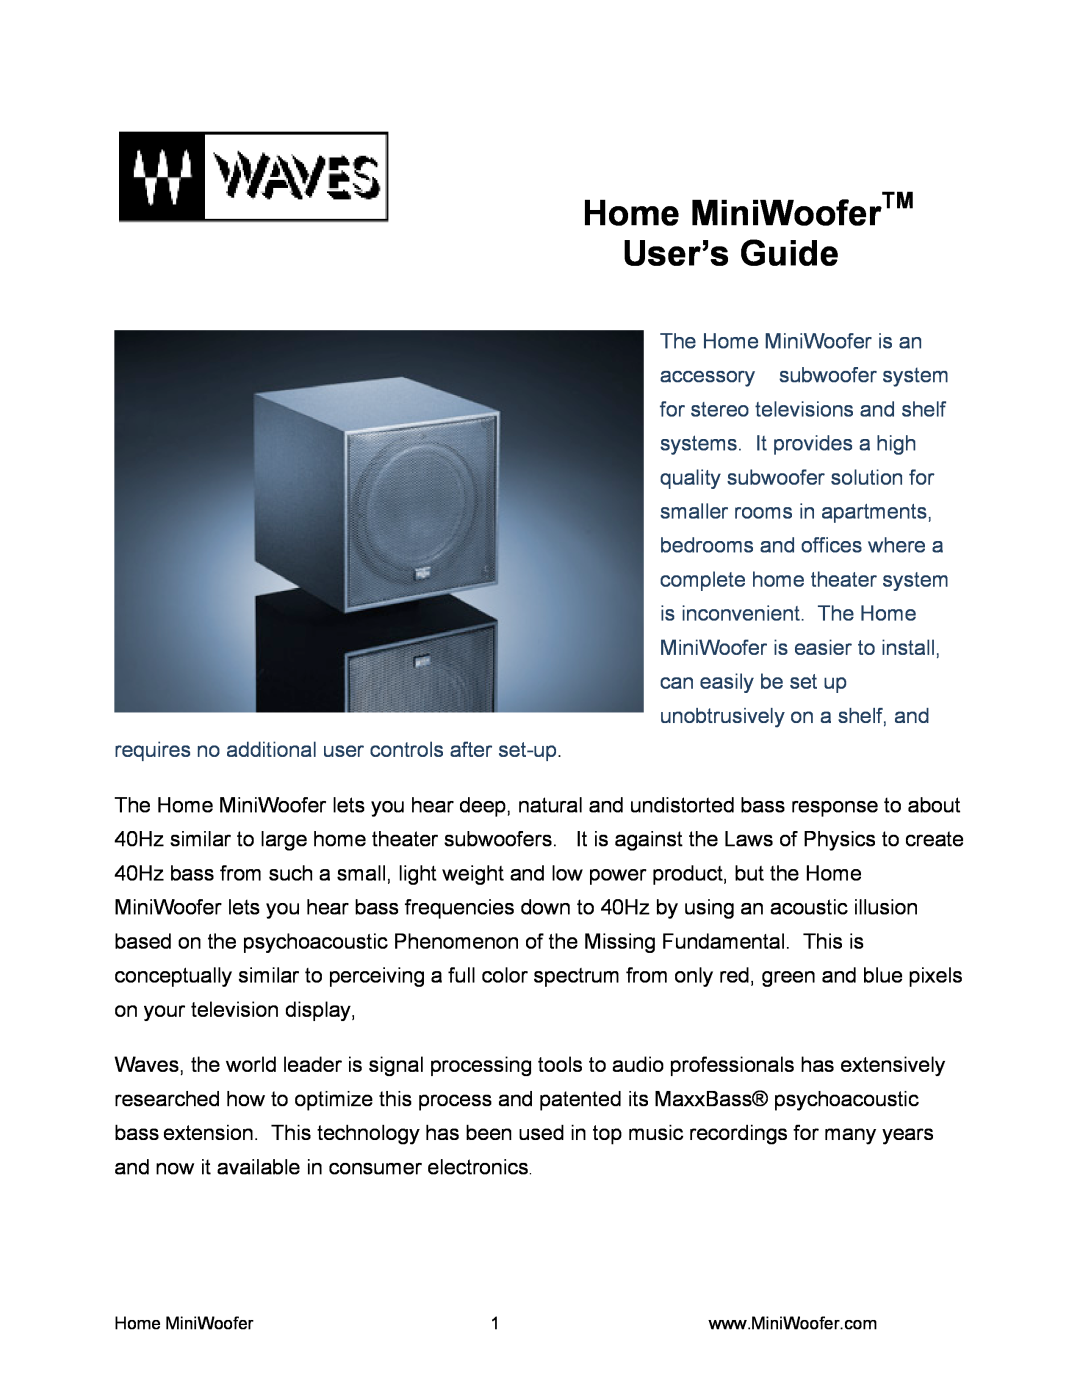 Waves manual Home MiniWooferTM User’s Guide 